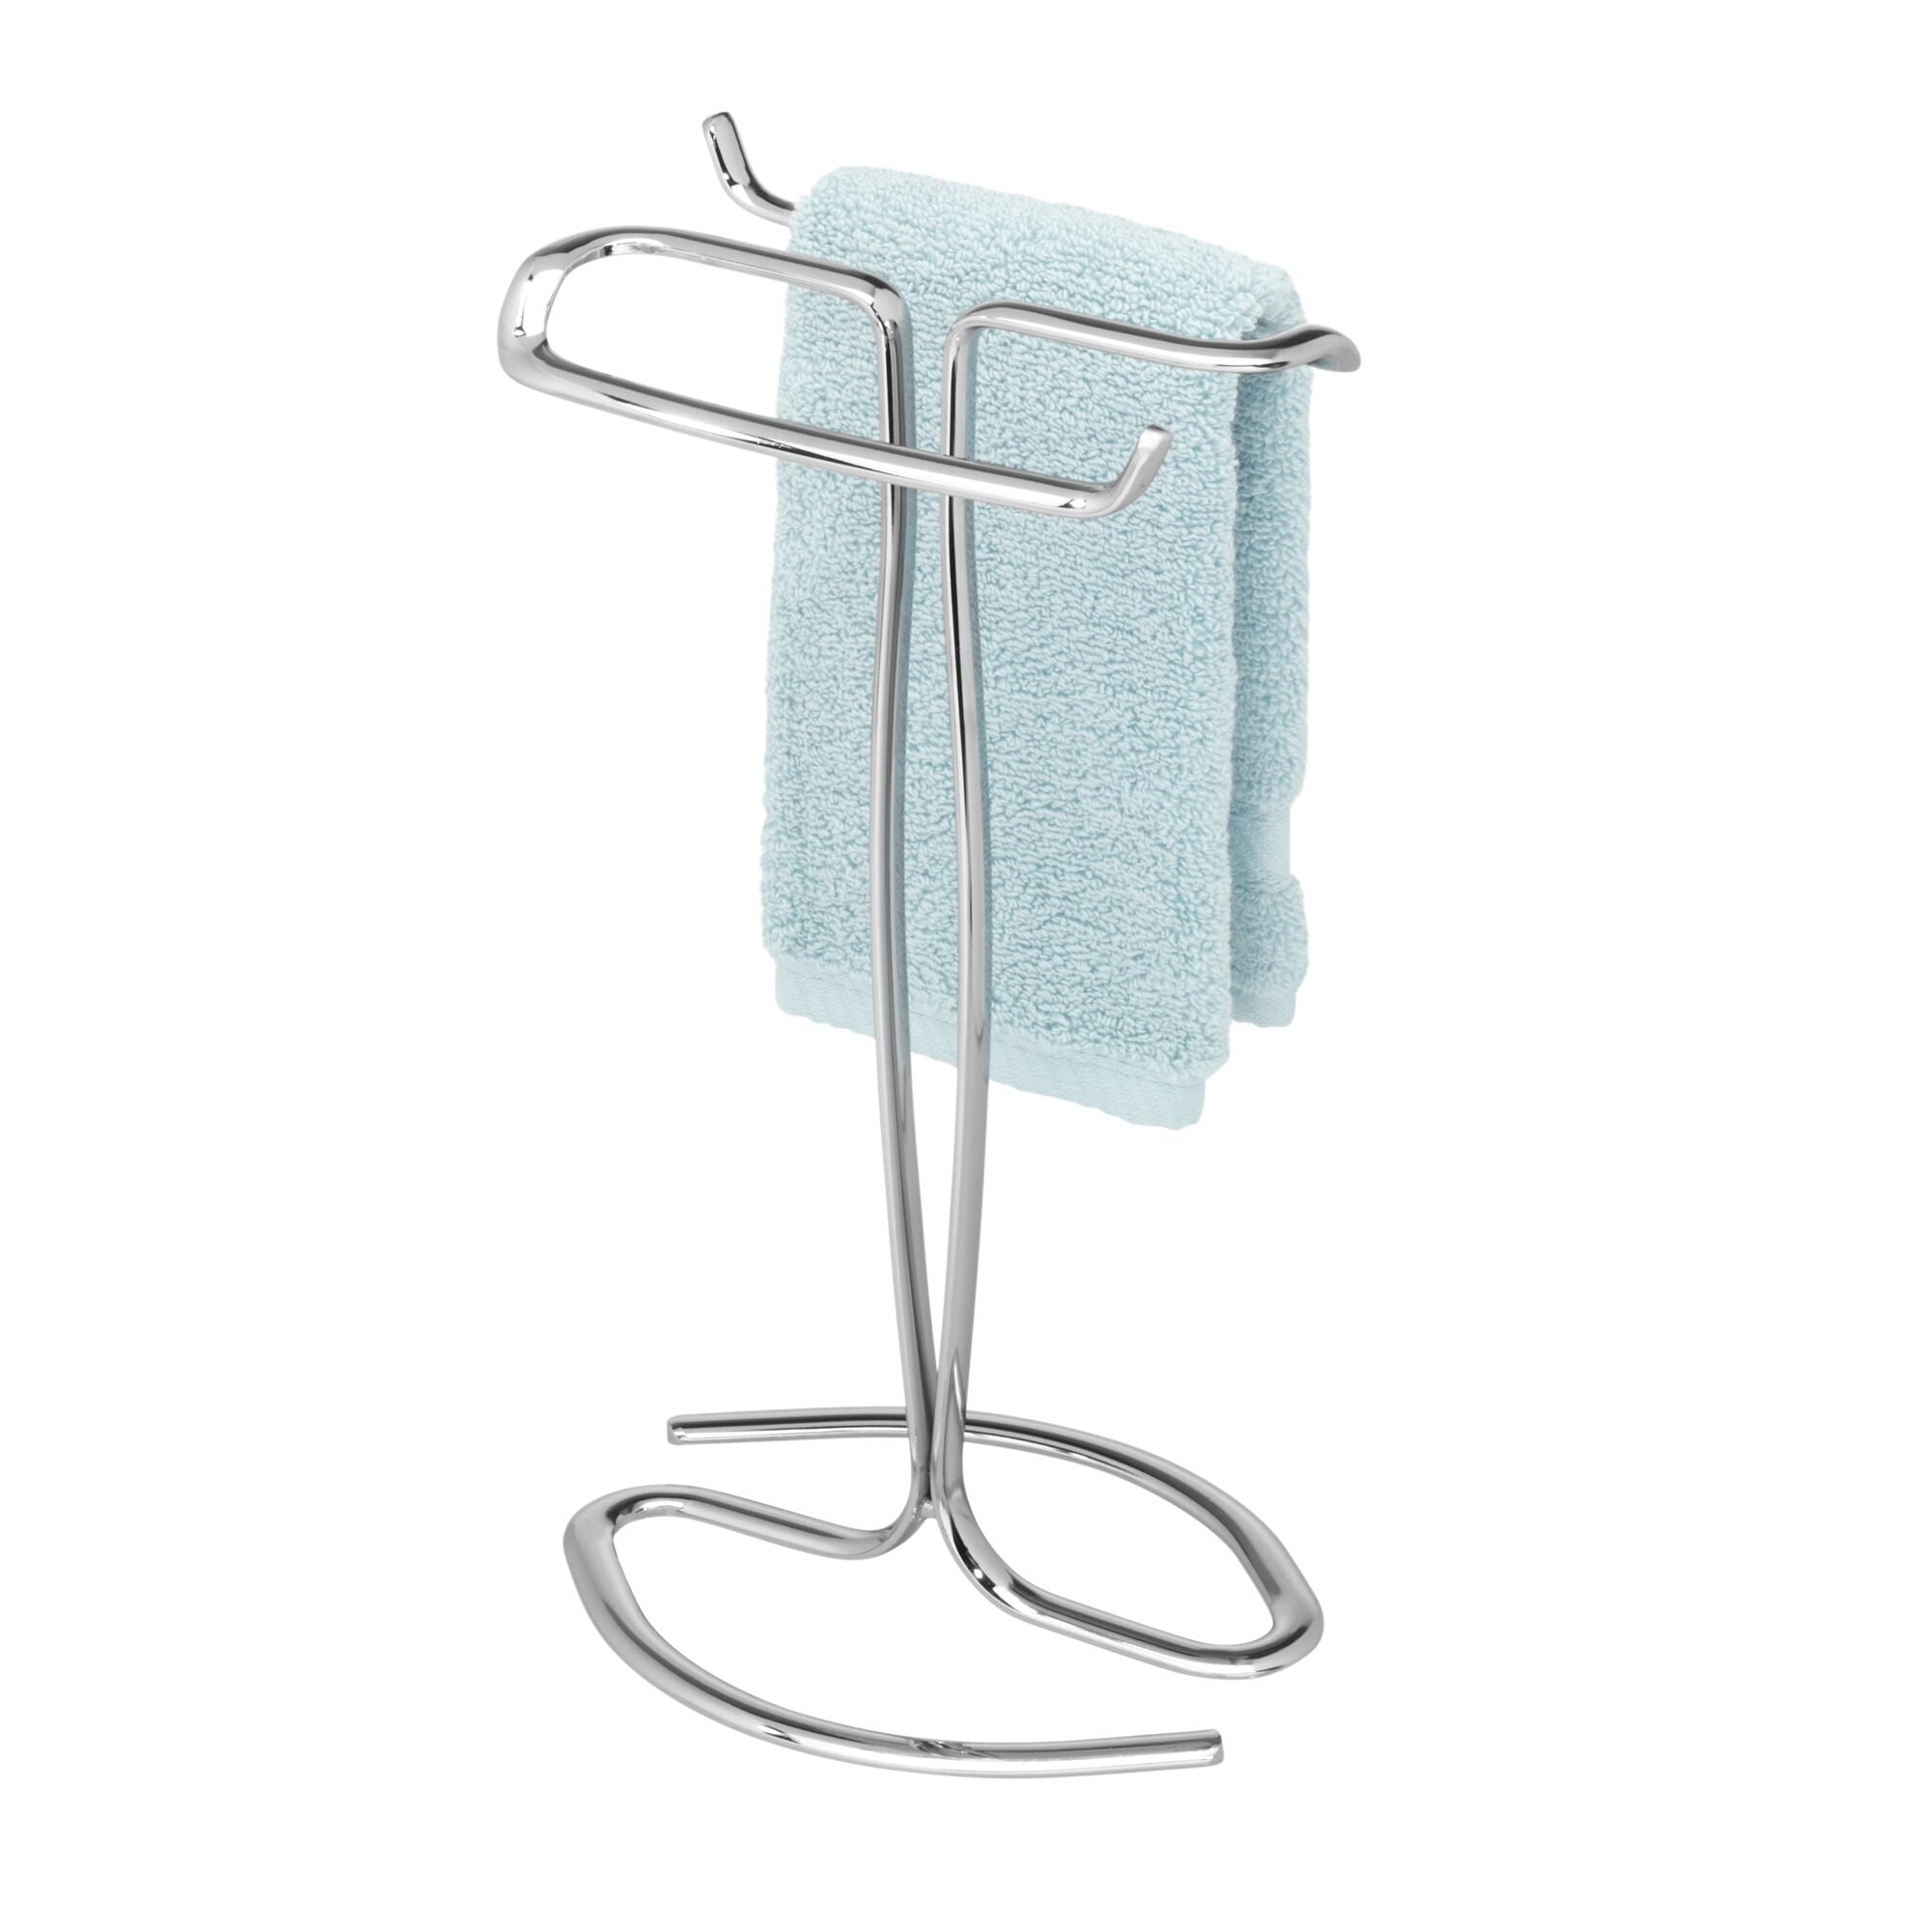 Interdesign Axis Paper Towel Holder, Chrome